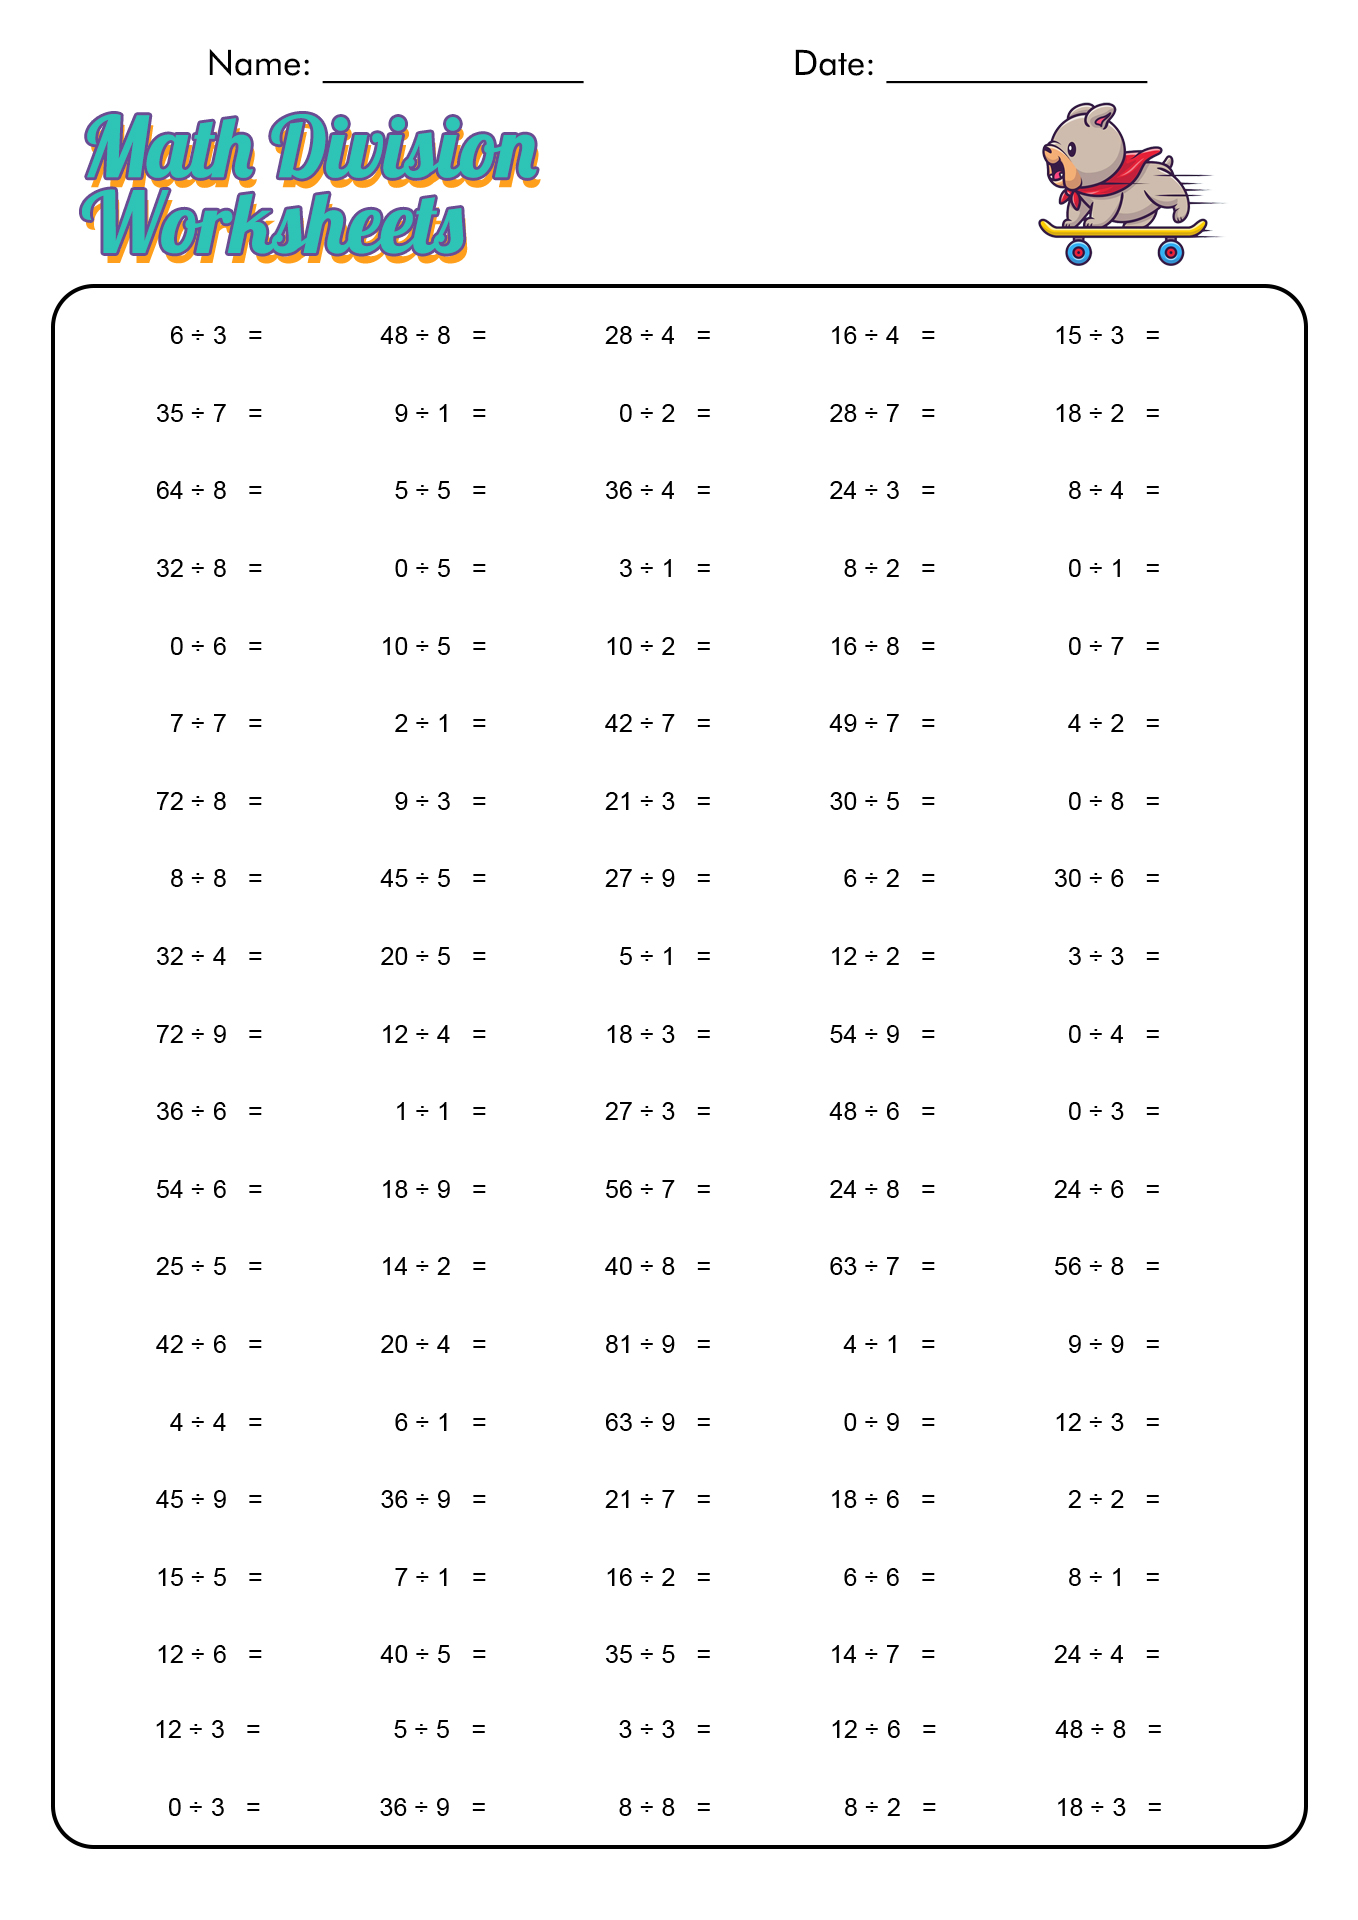 printable-minute-math-worksheets-printable-blank-world